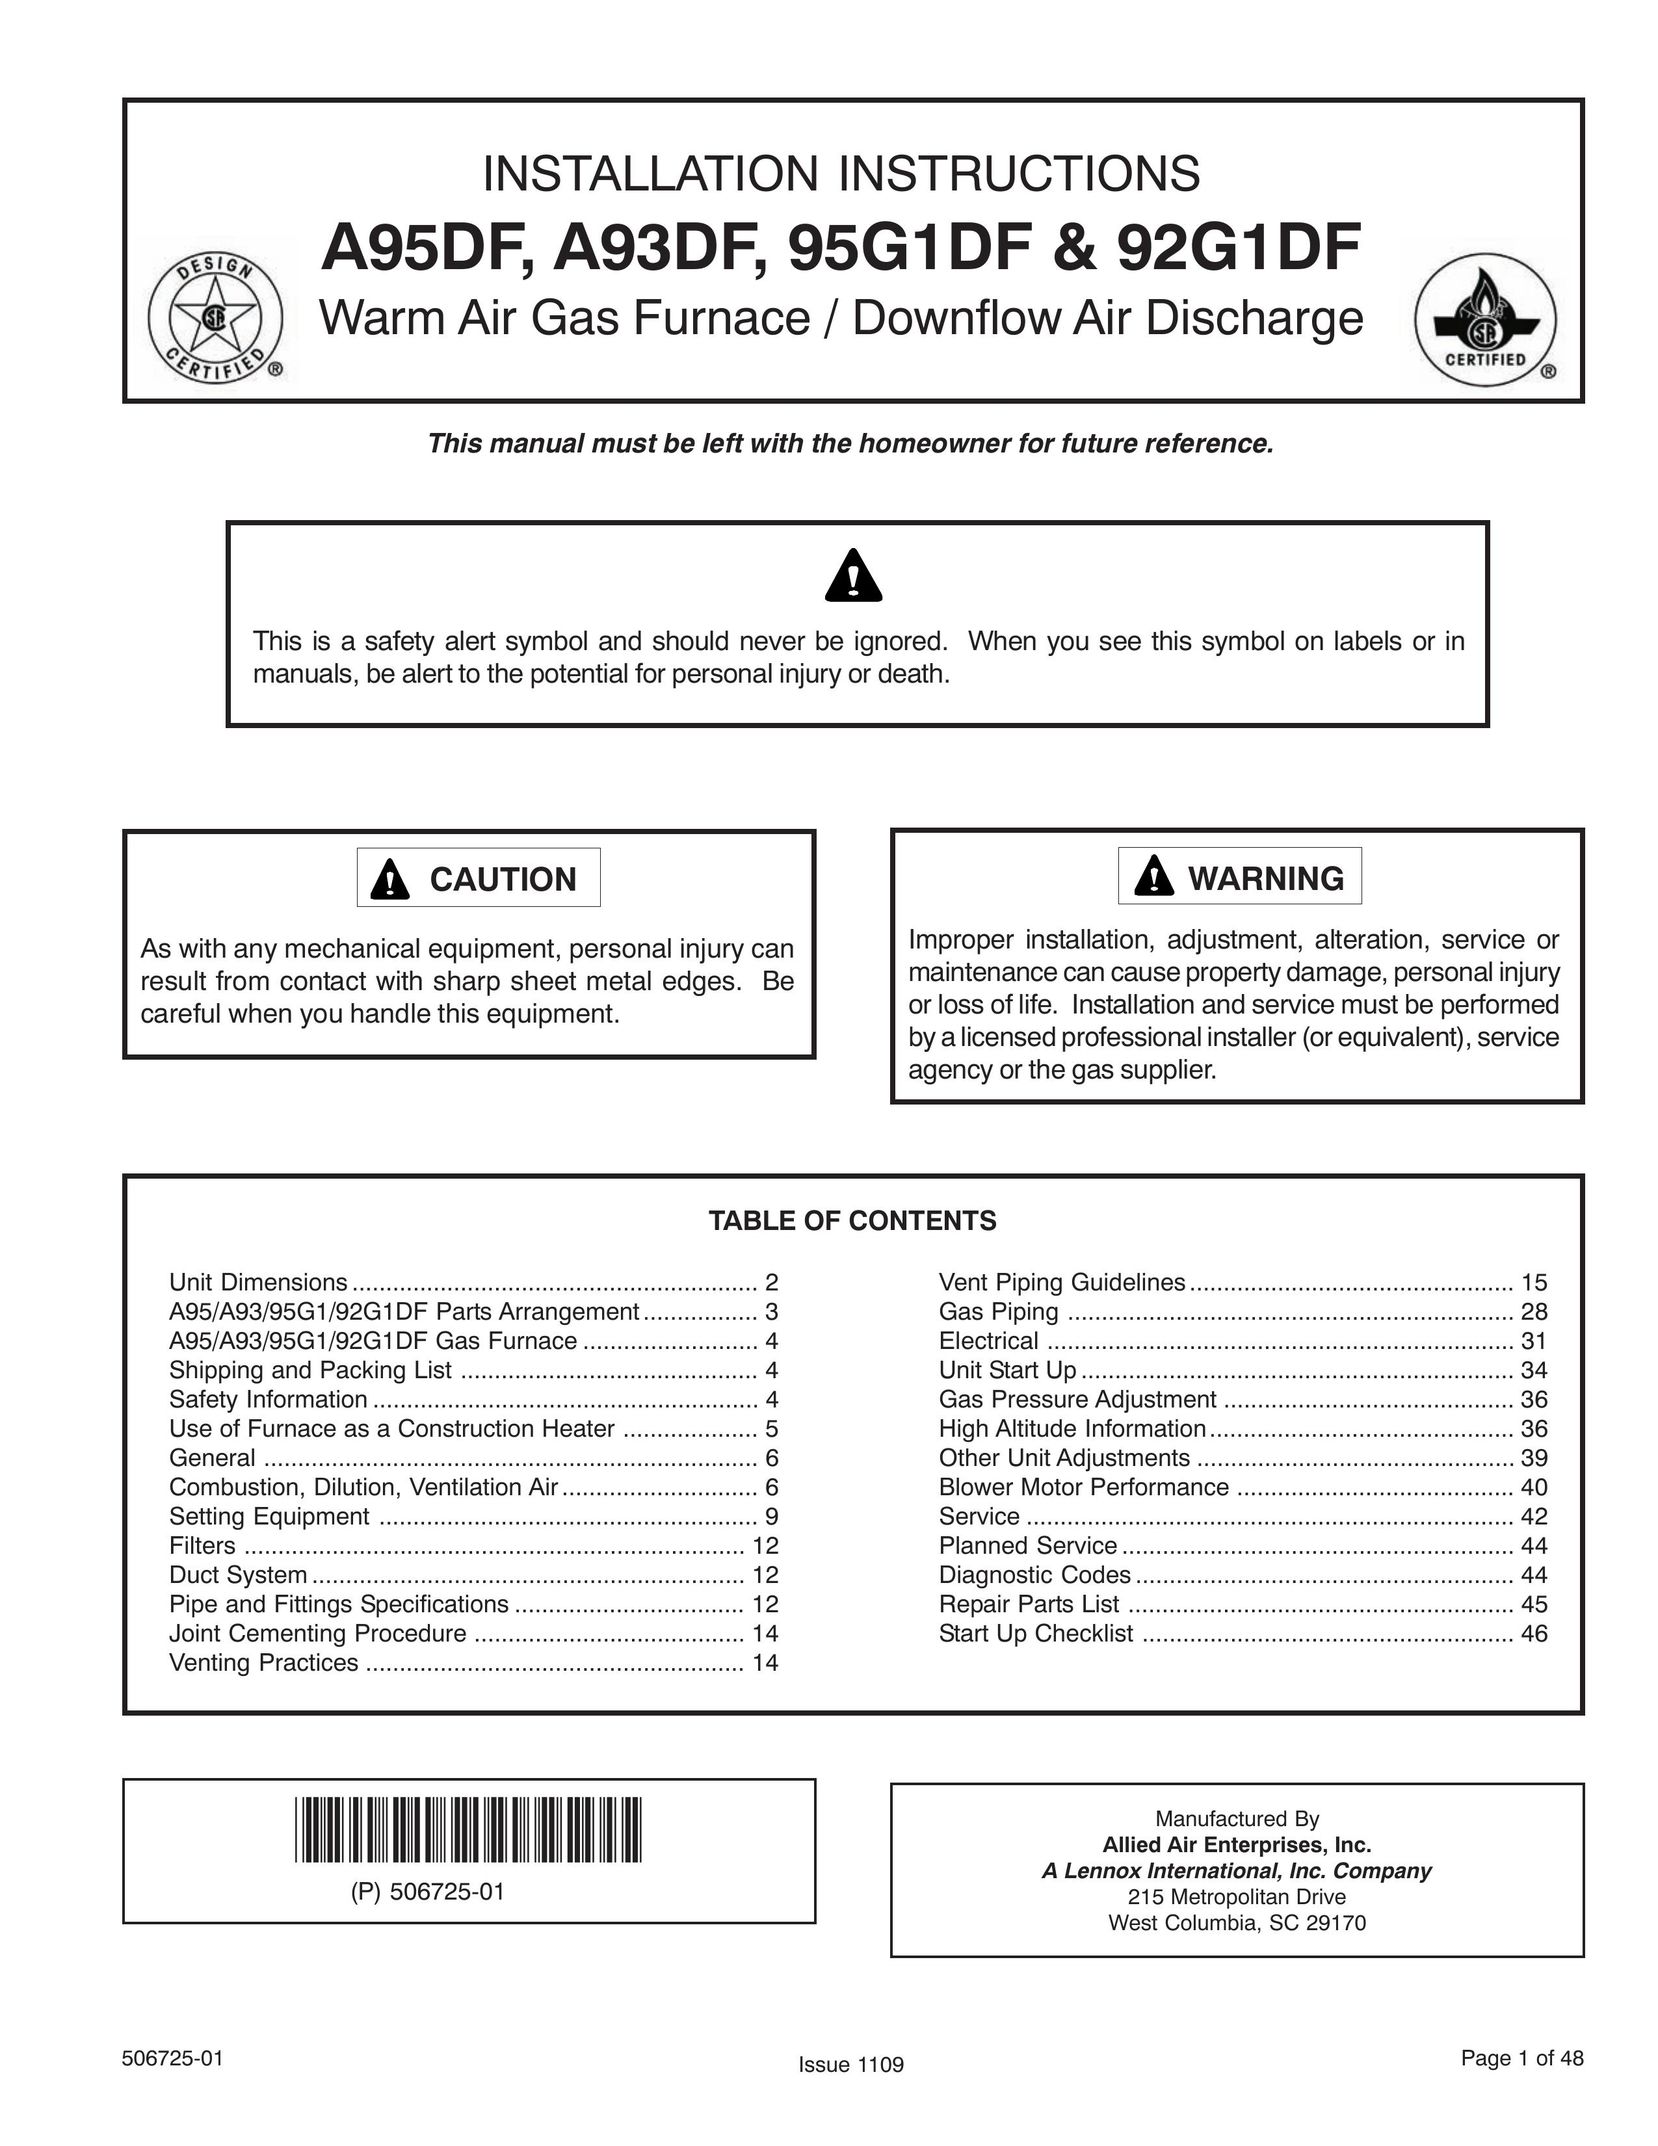 Allied Air Enterprises A95DF Furnace User Manual